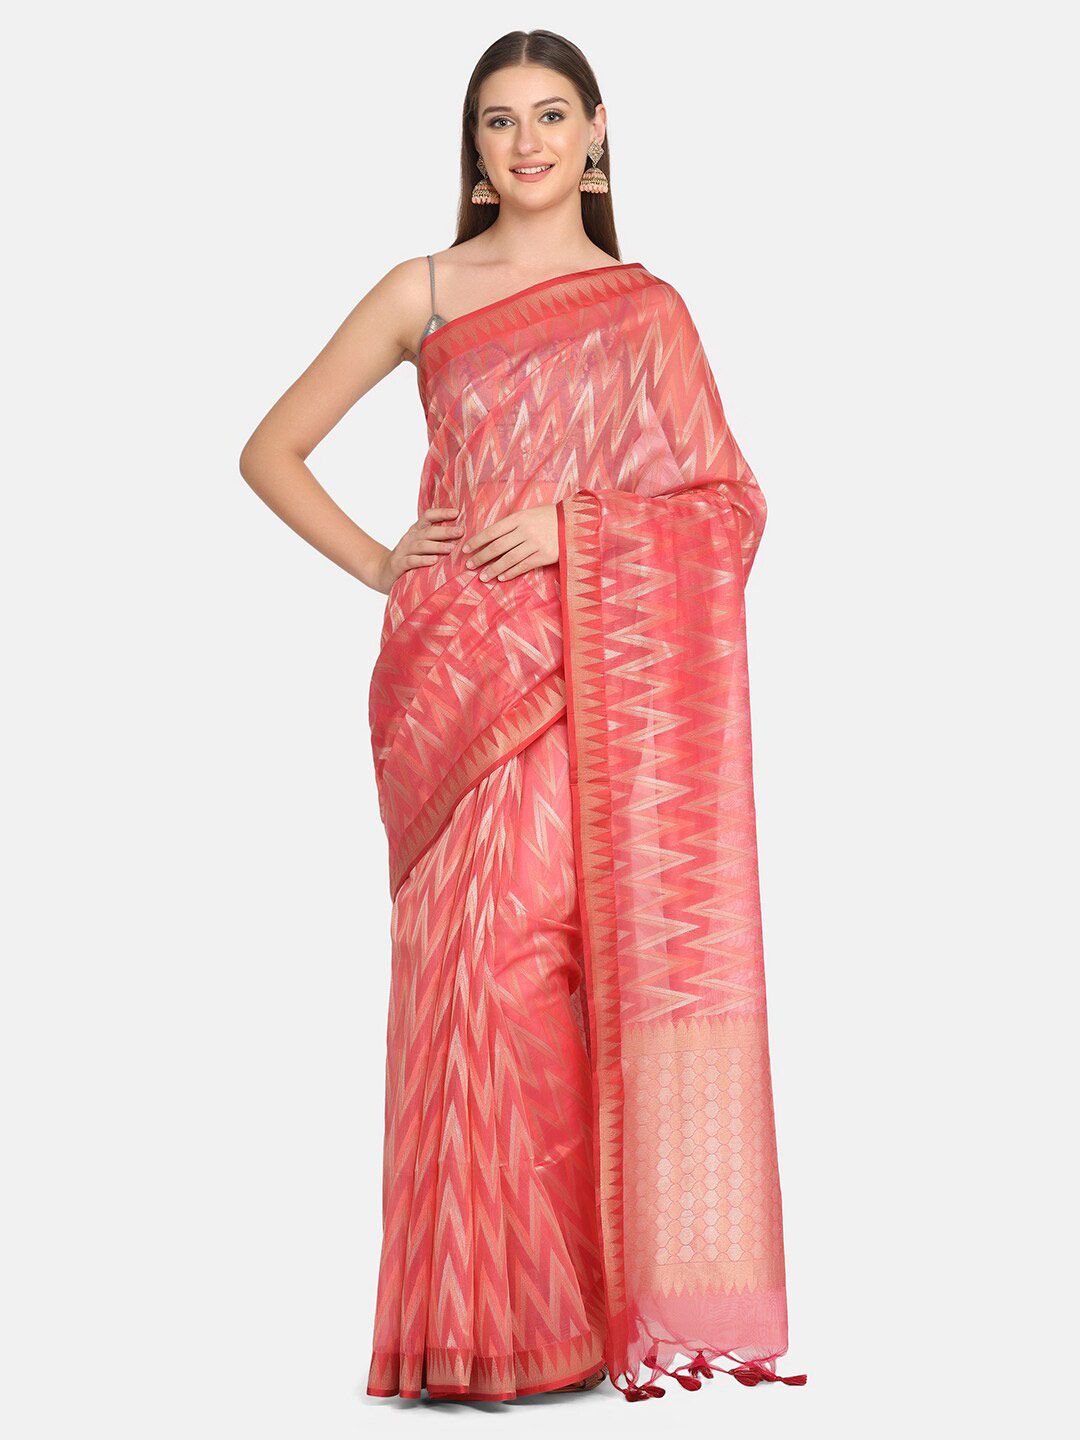 BOMBAY SELECTIONS Pink & Gold-Toned Zari Organza Banarasi Saree Price in India